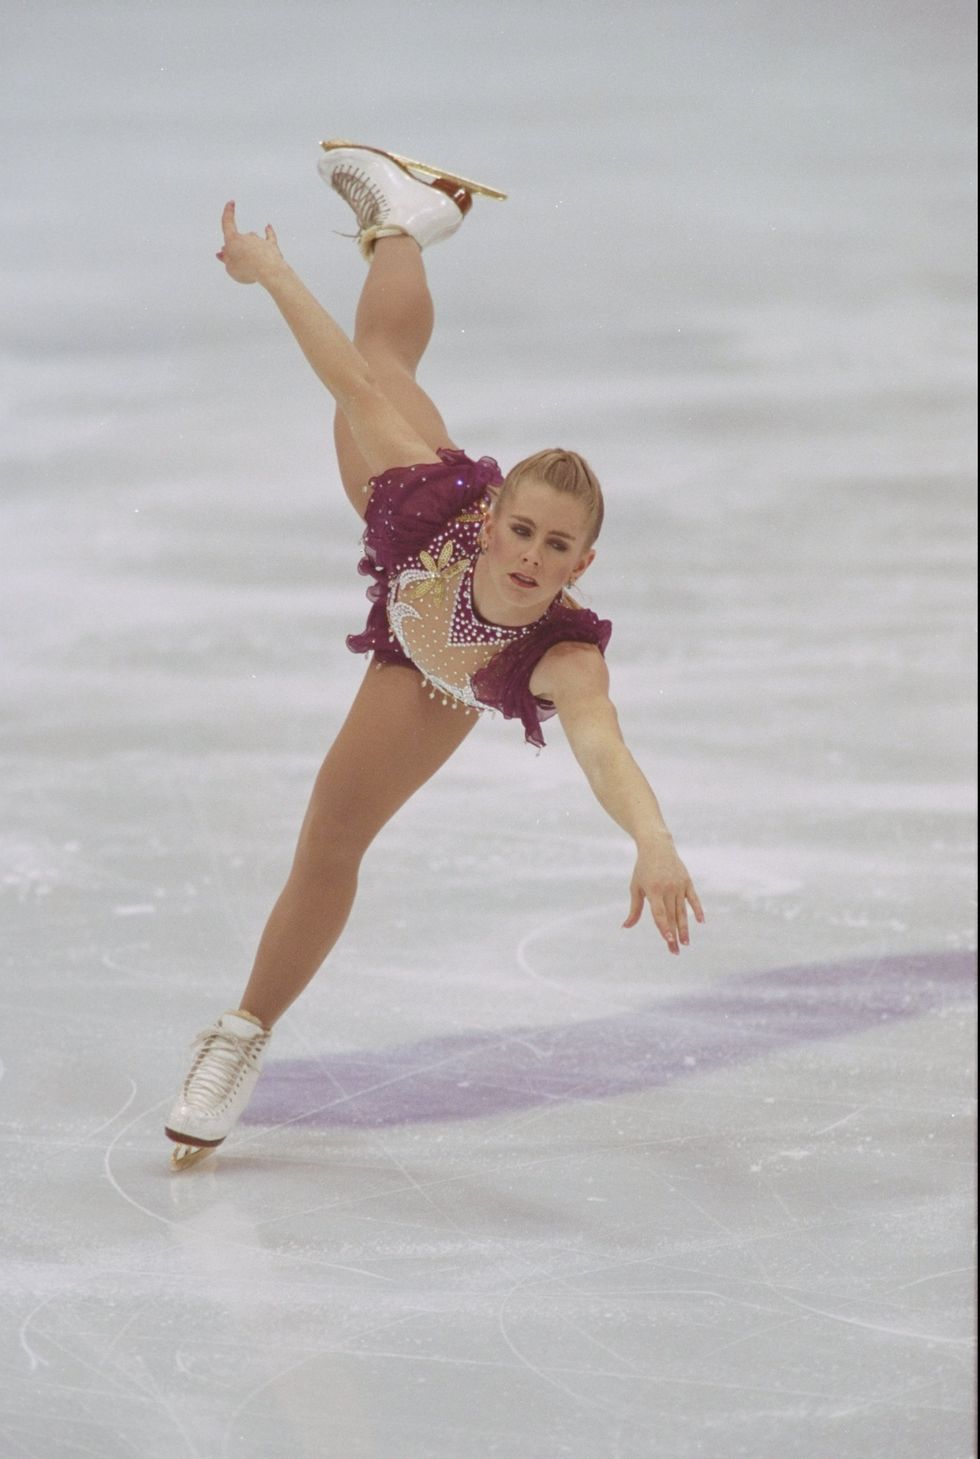 Figure skate, Sports, Skating, Figure skating, Ice skating, Ice dancing, Jumping, Ice skate, Recreation, Axel jump, 